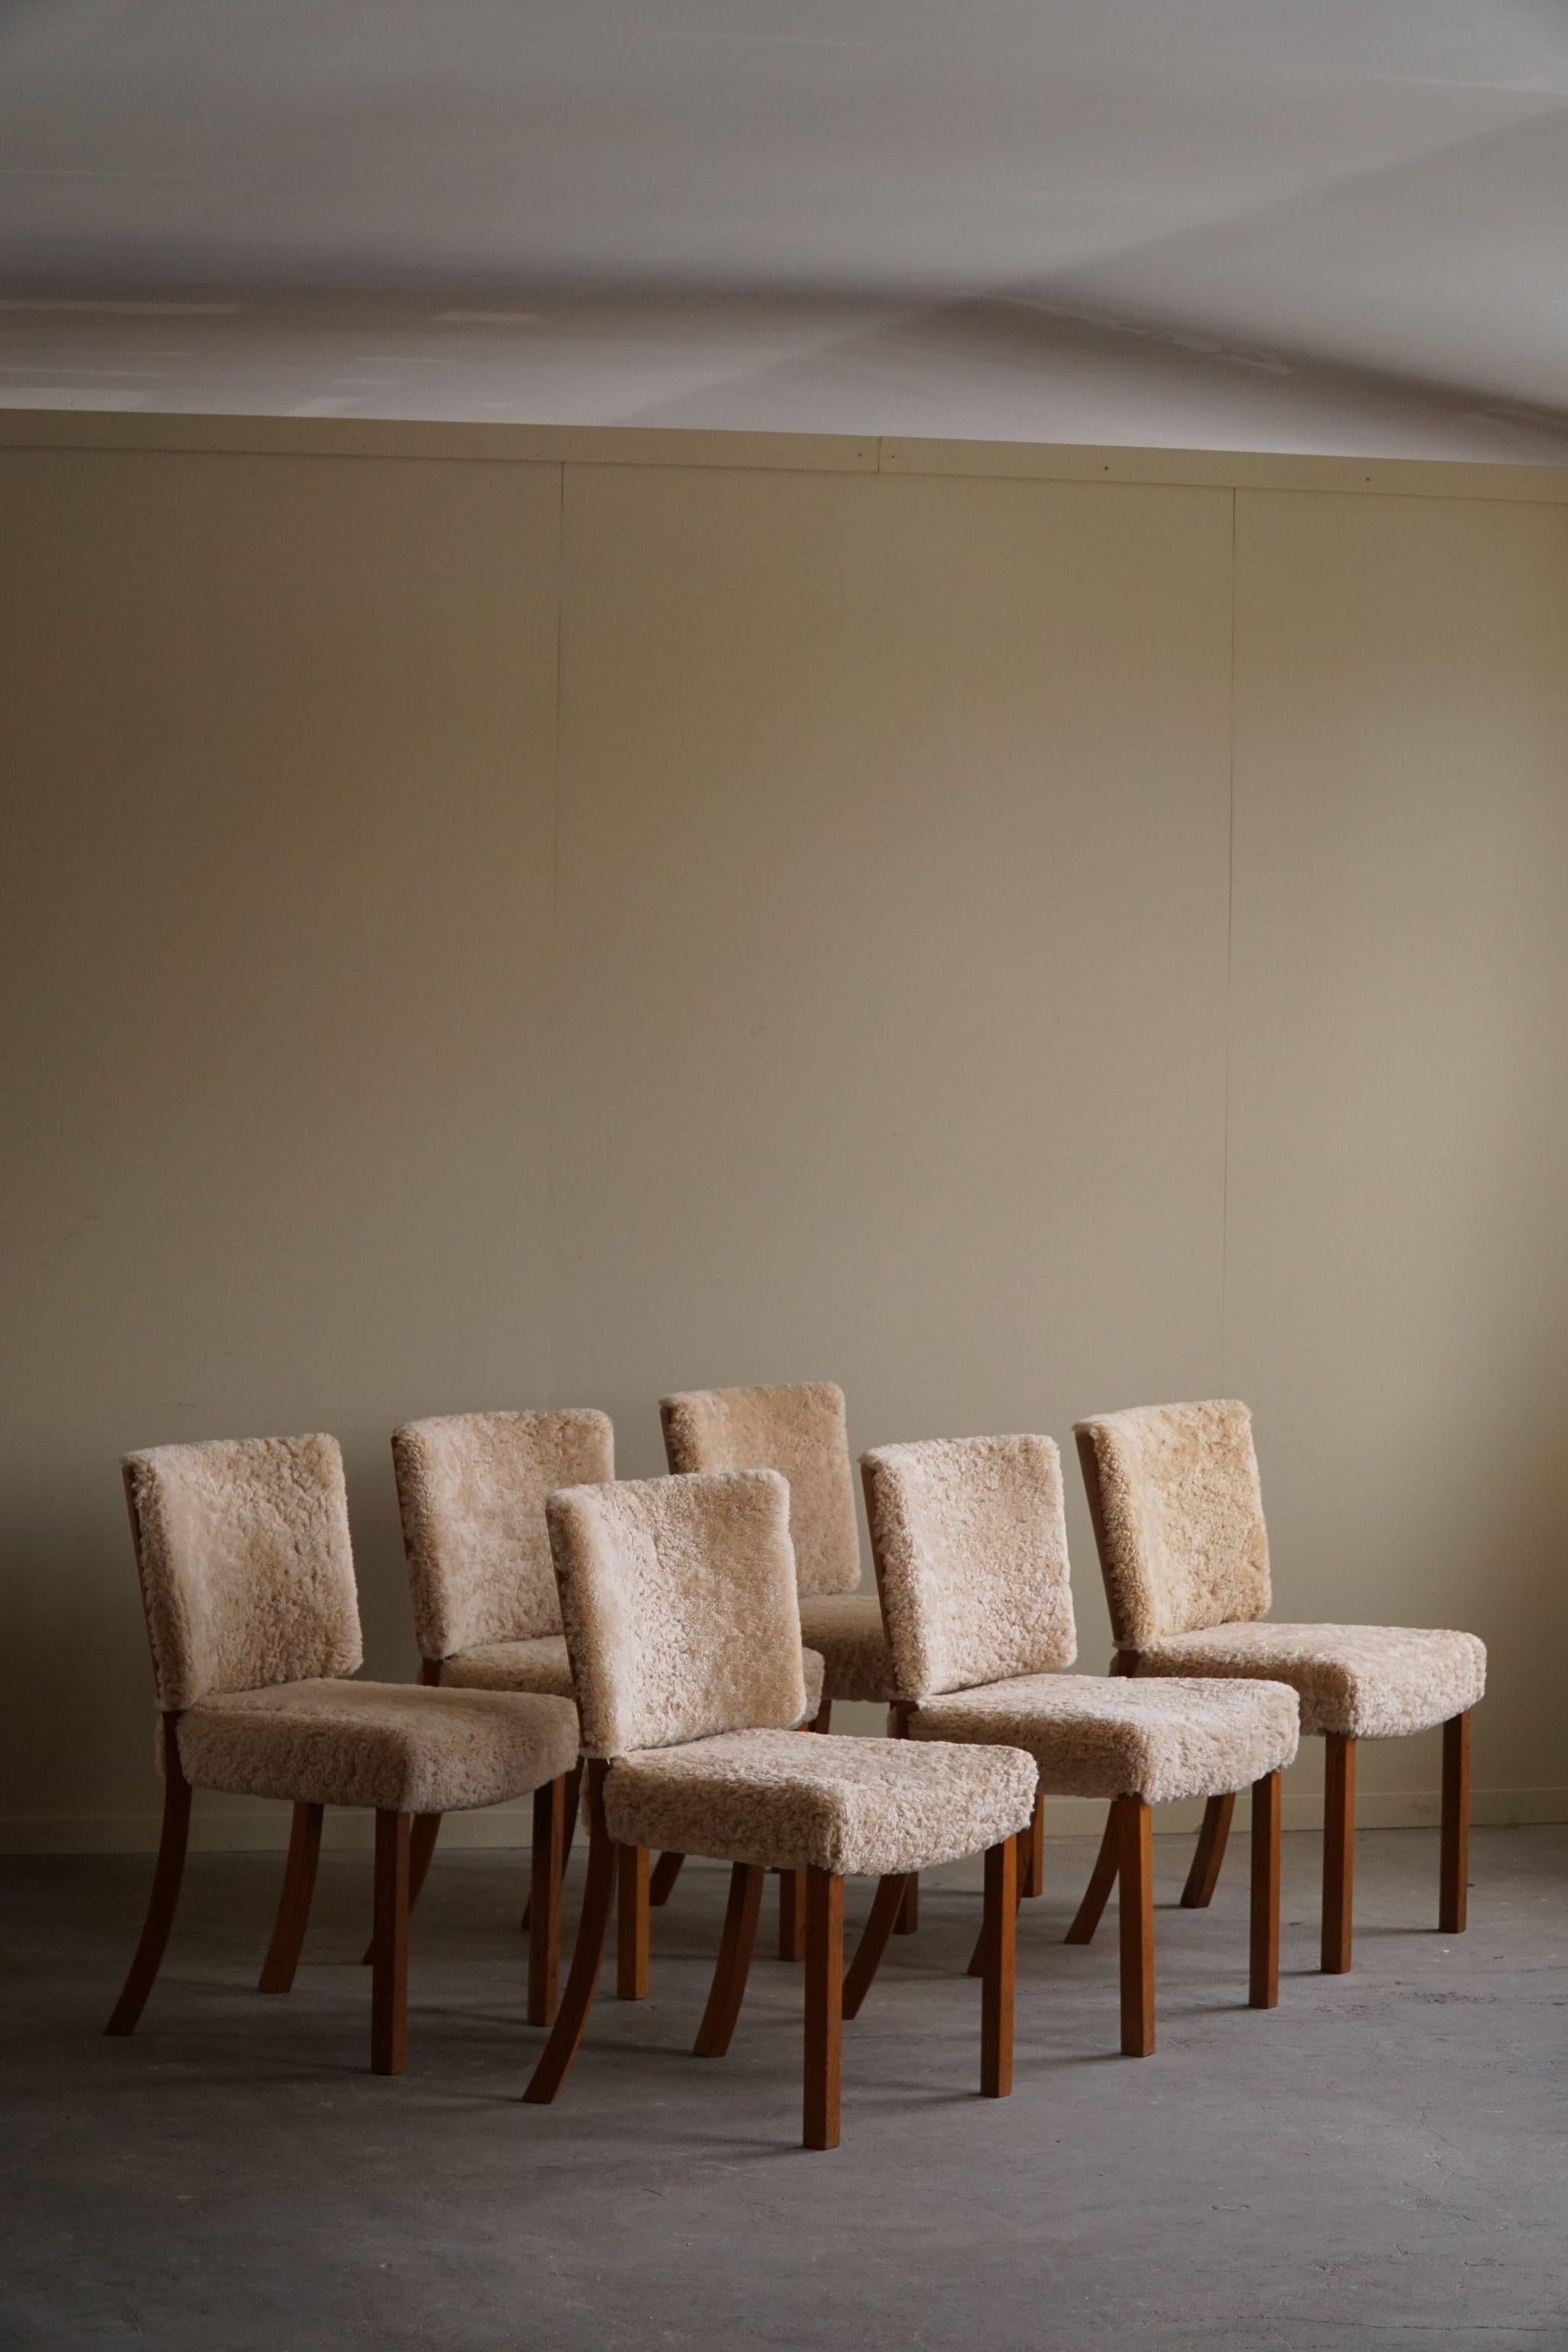 A set of 8 Dining Chairs in Oak and Lambswool, Danish Modern, Kaj Gottlob, 1950s For Sale 6